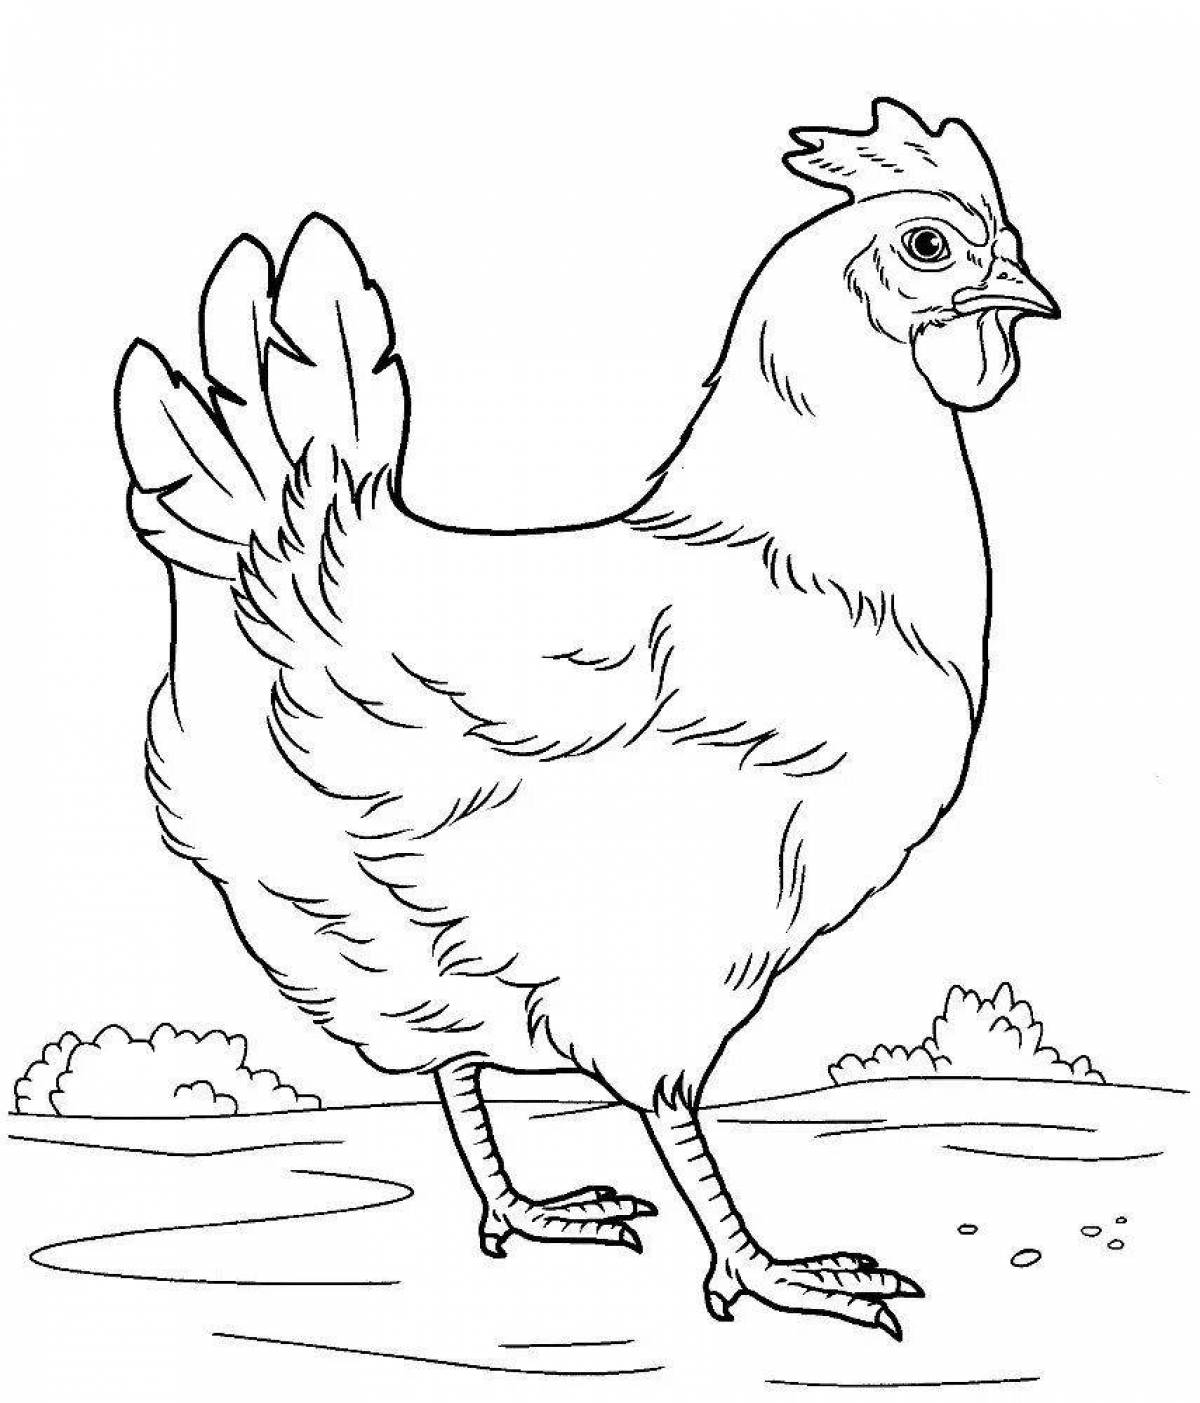 Fancy chicken drawing for kids